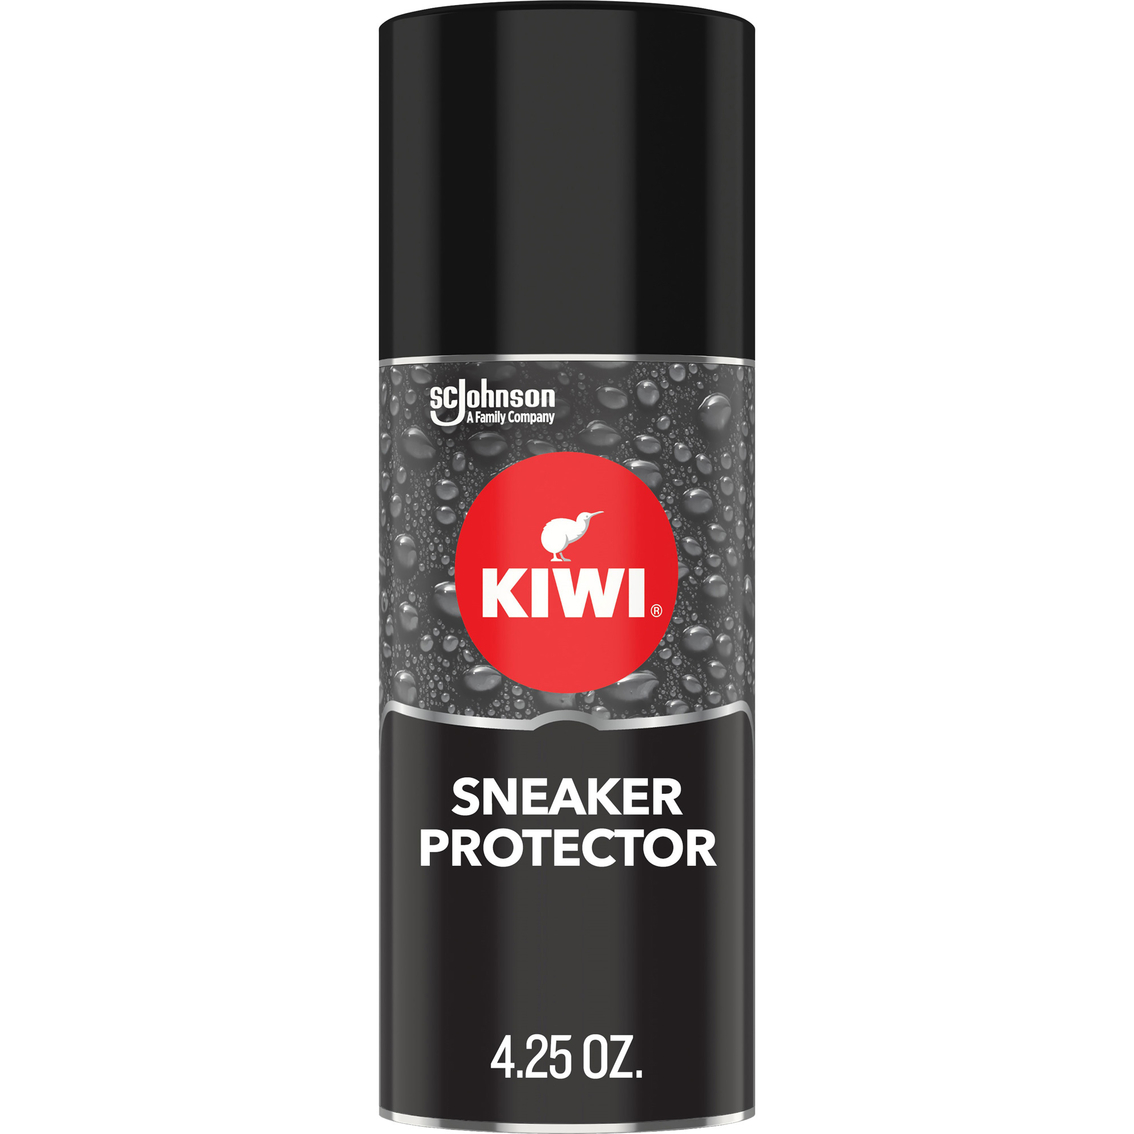 Kiwi Sneaker Protector Aerosol Spray, 4.25 oz.